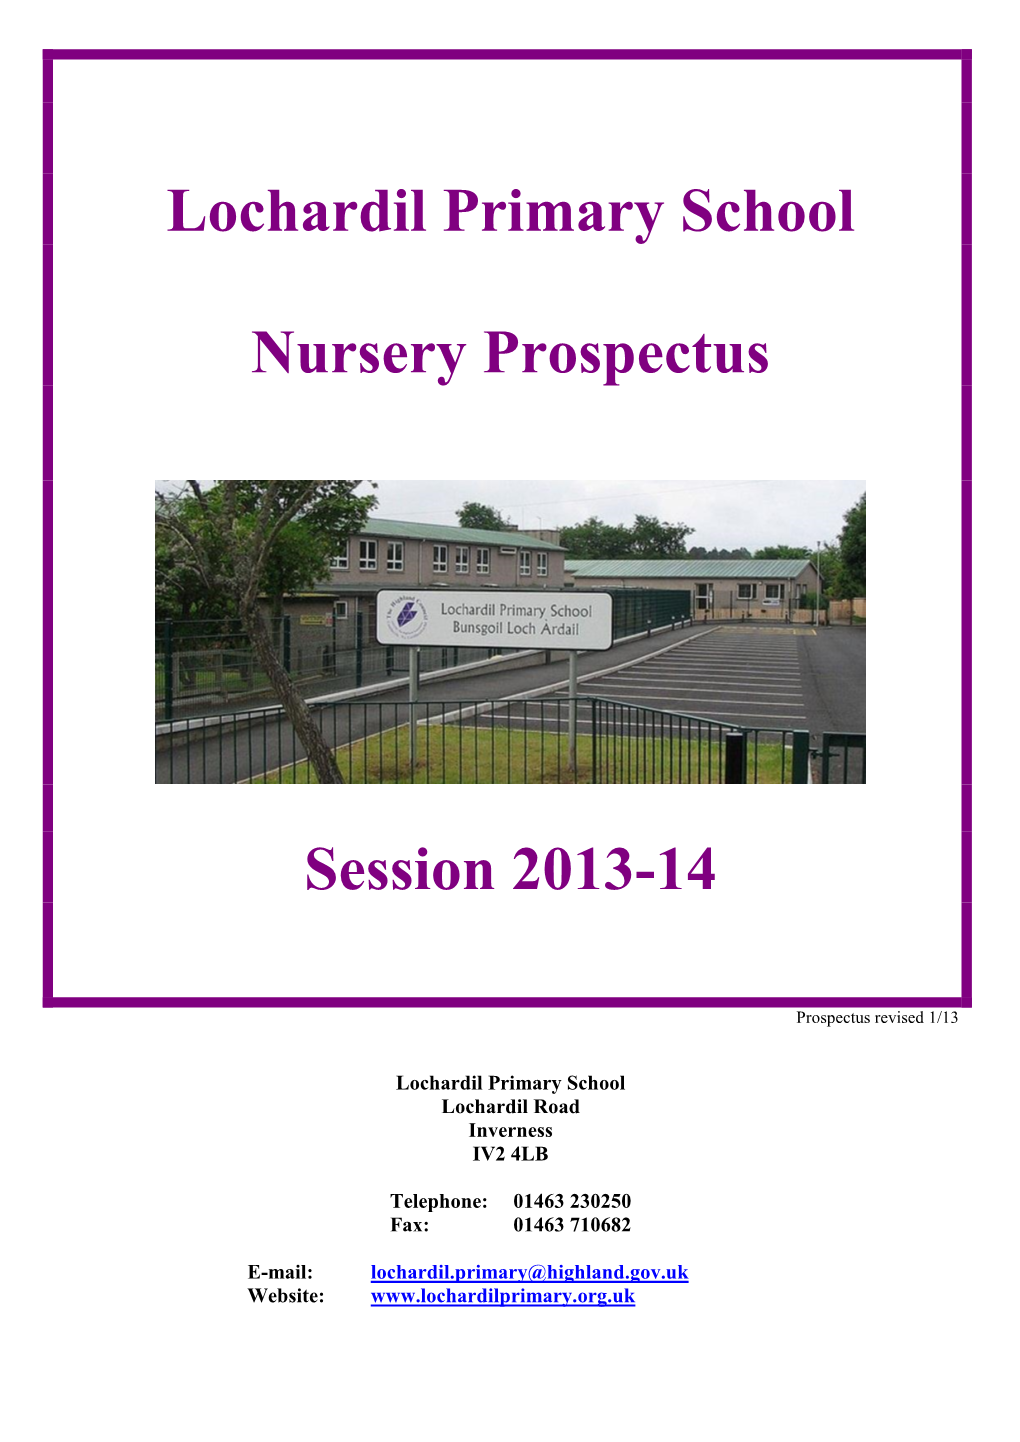 Lochardil Primary School Nursery Prospectus Session 2013-14